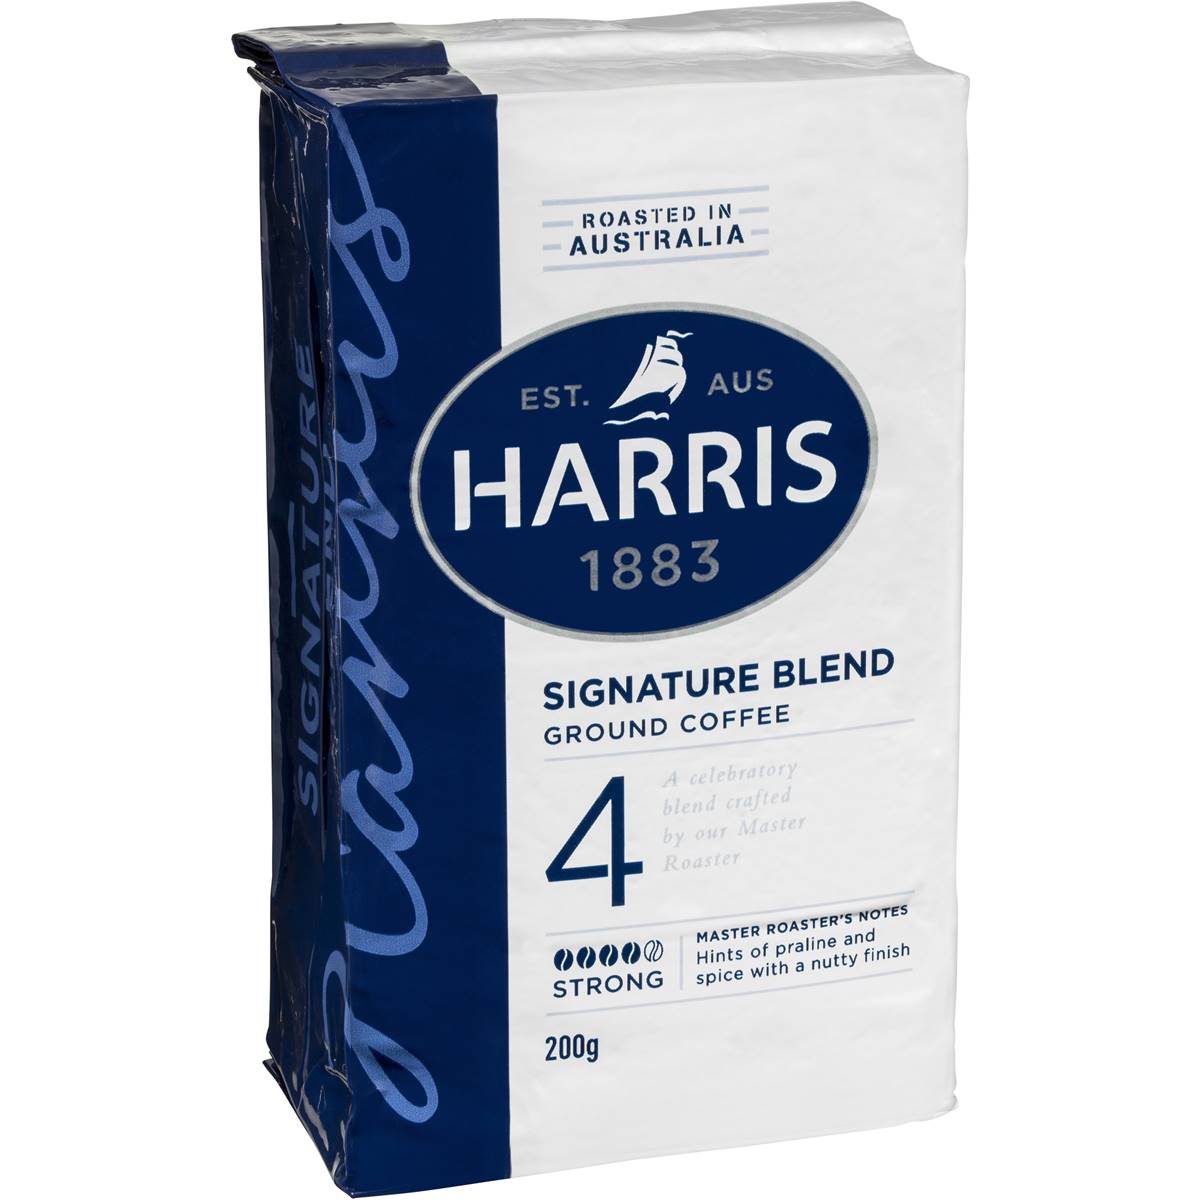 Harris Ground Coffee Signature Blend